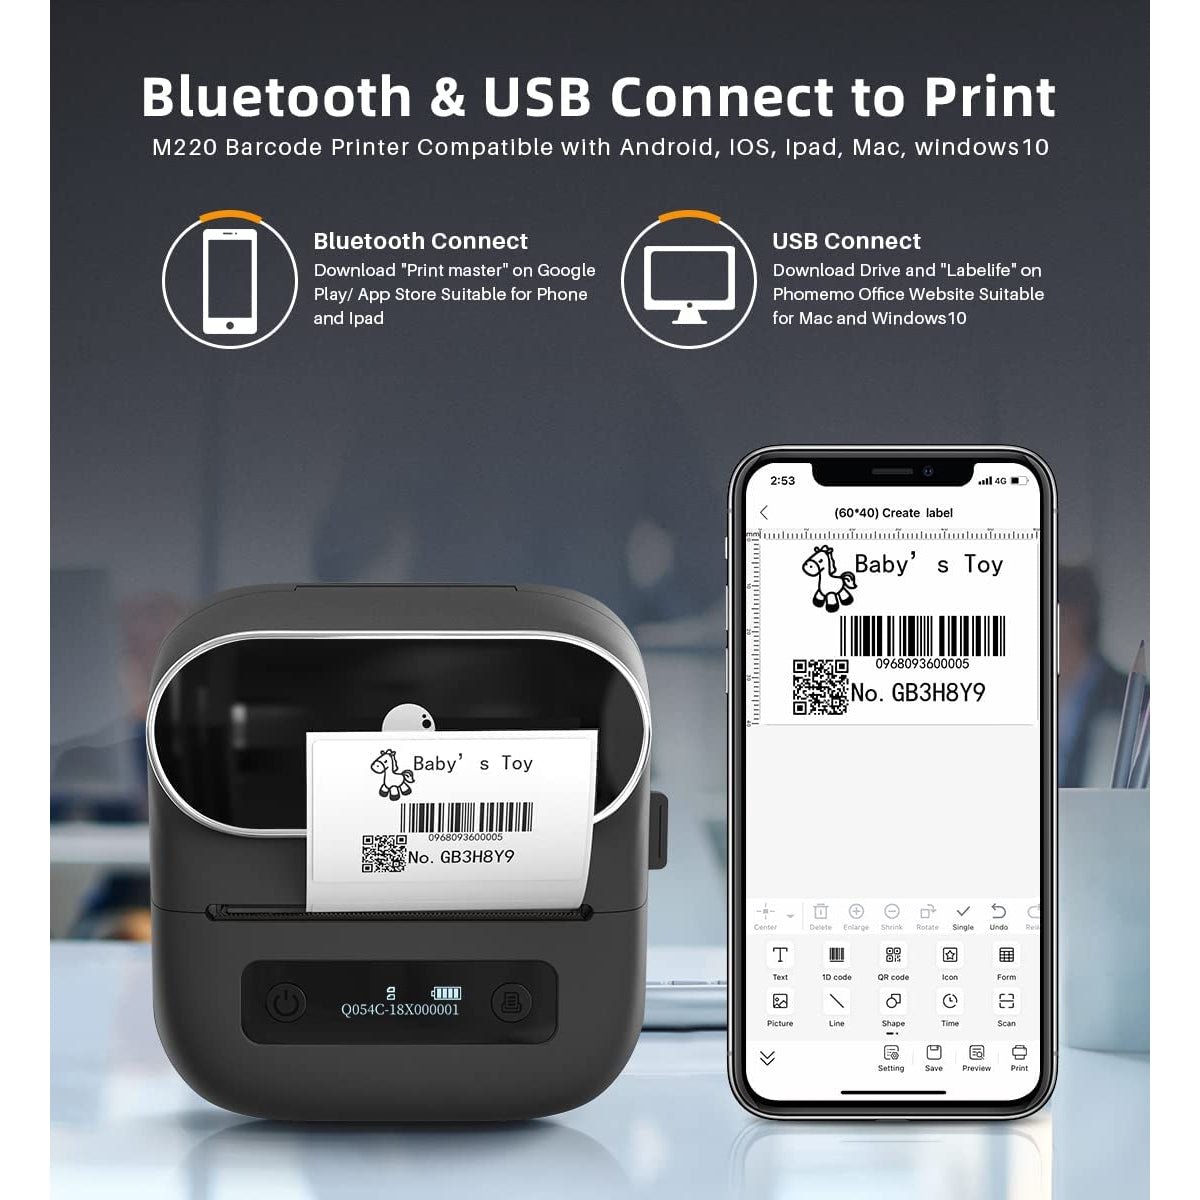 Smart Label Printer M220